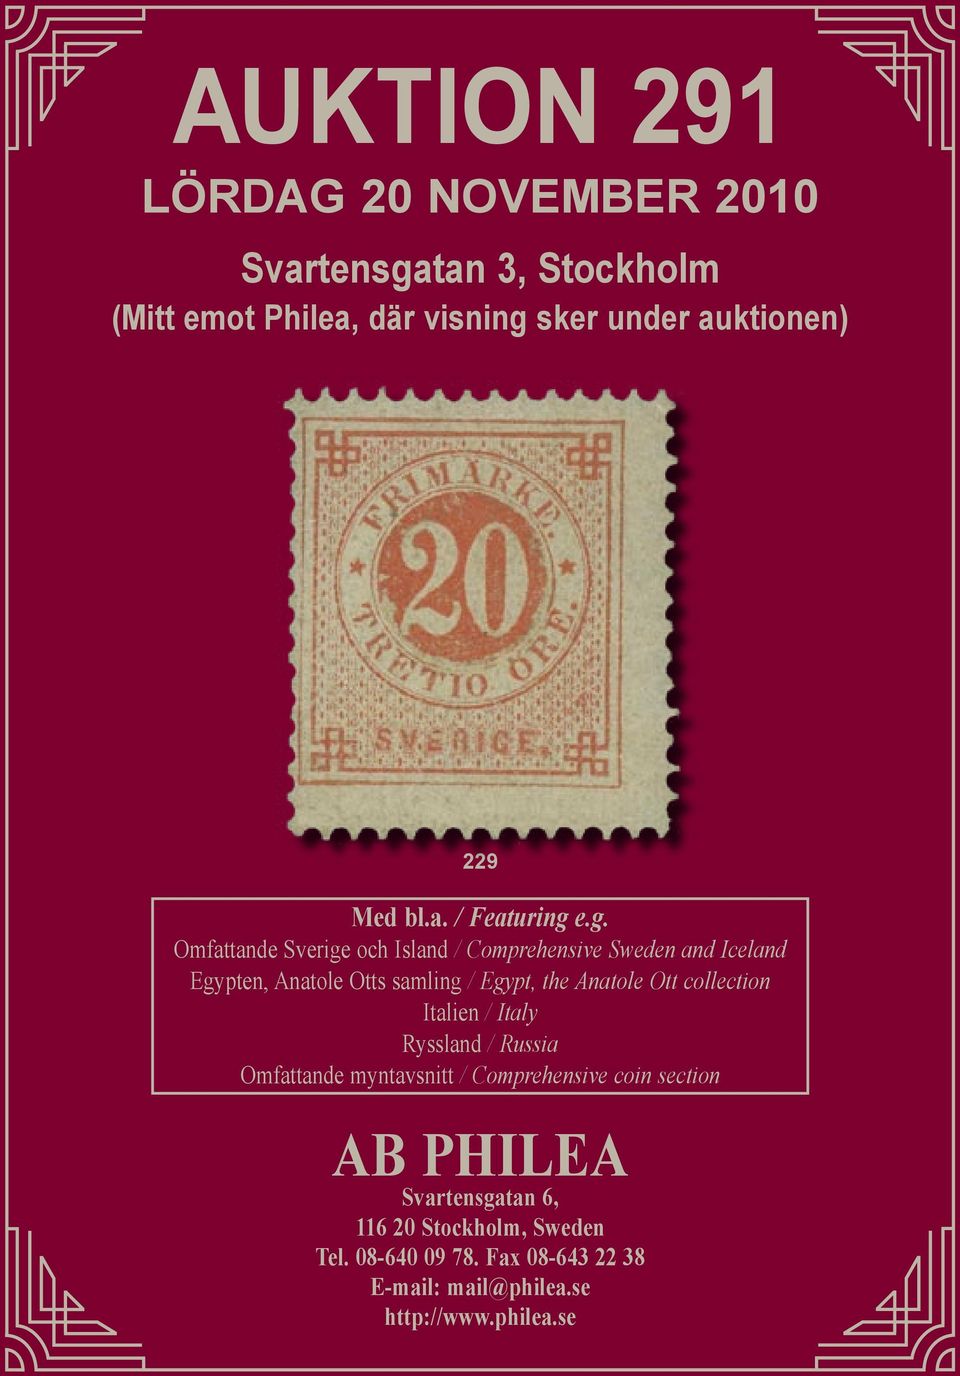 e.g. Omfattande Sverige och Island / Comprehensive Sweden and Iceland Egypten, Anatole Otts samling / Egypt, the Anatole